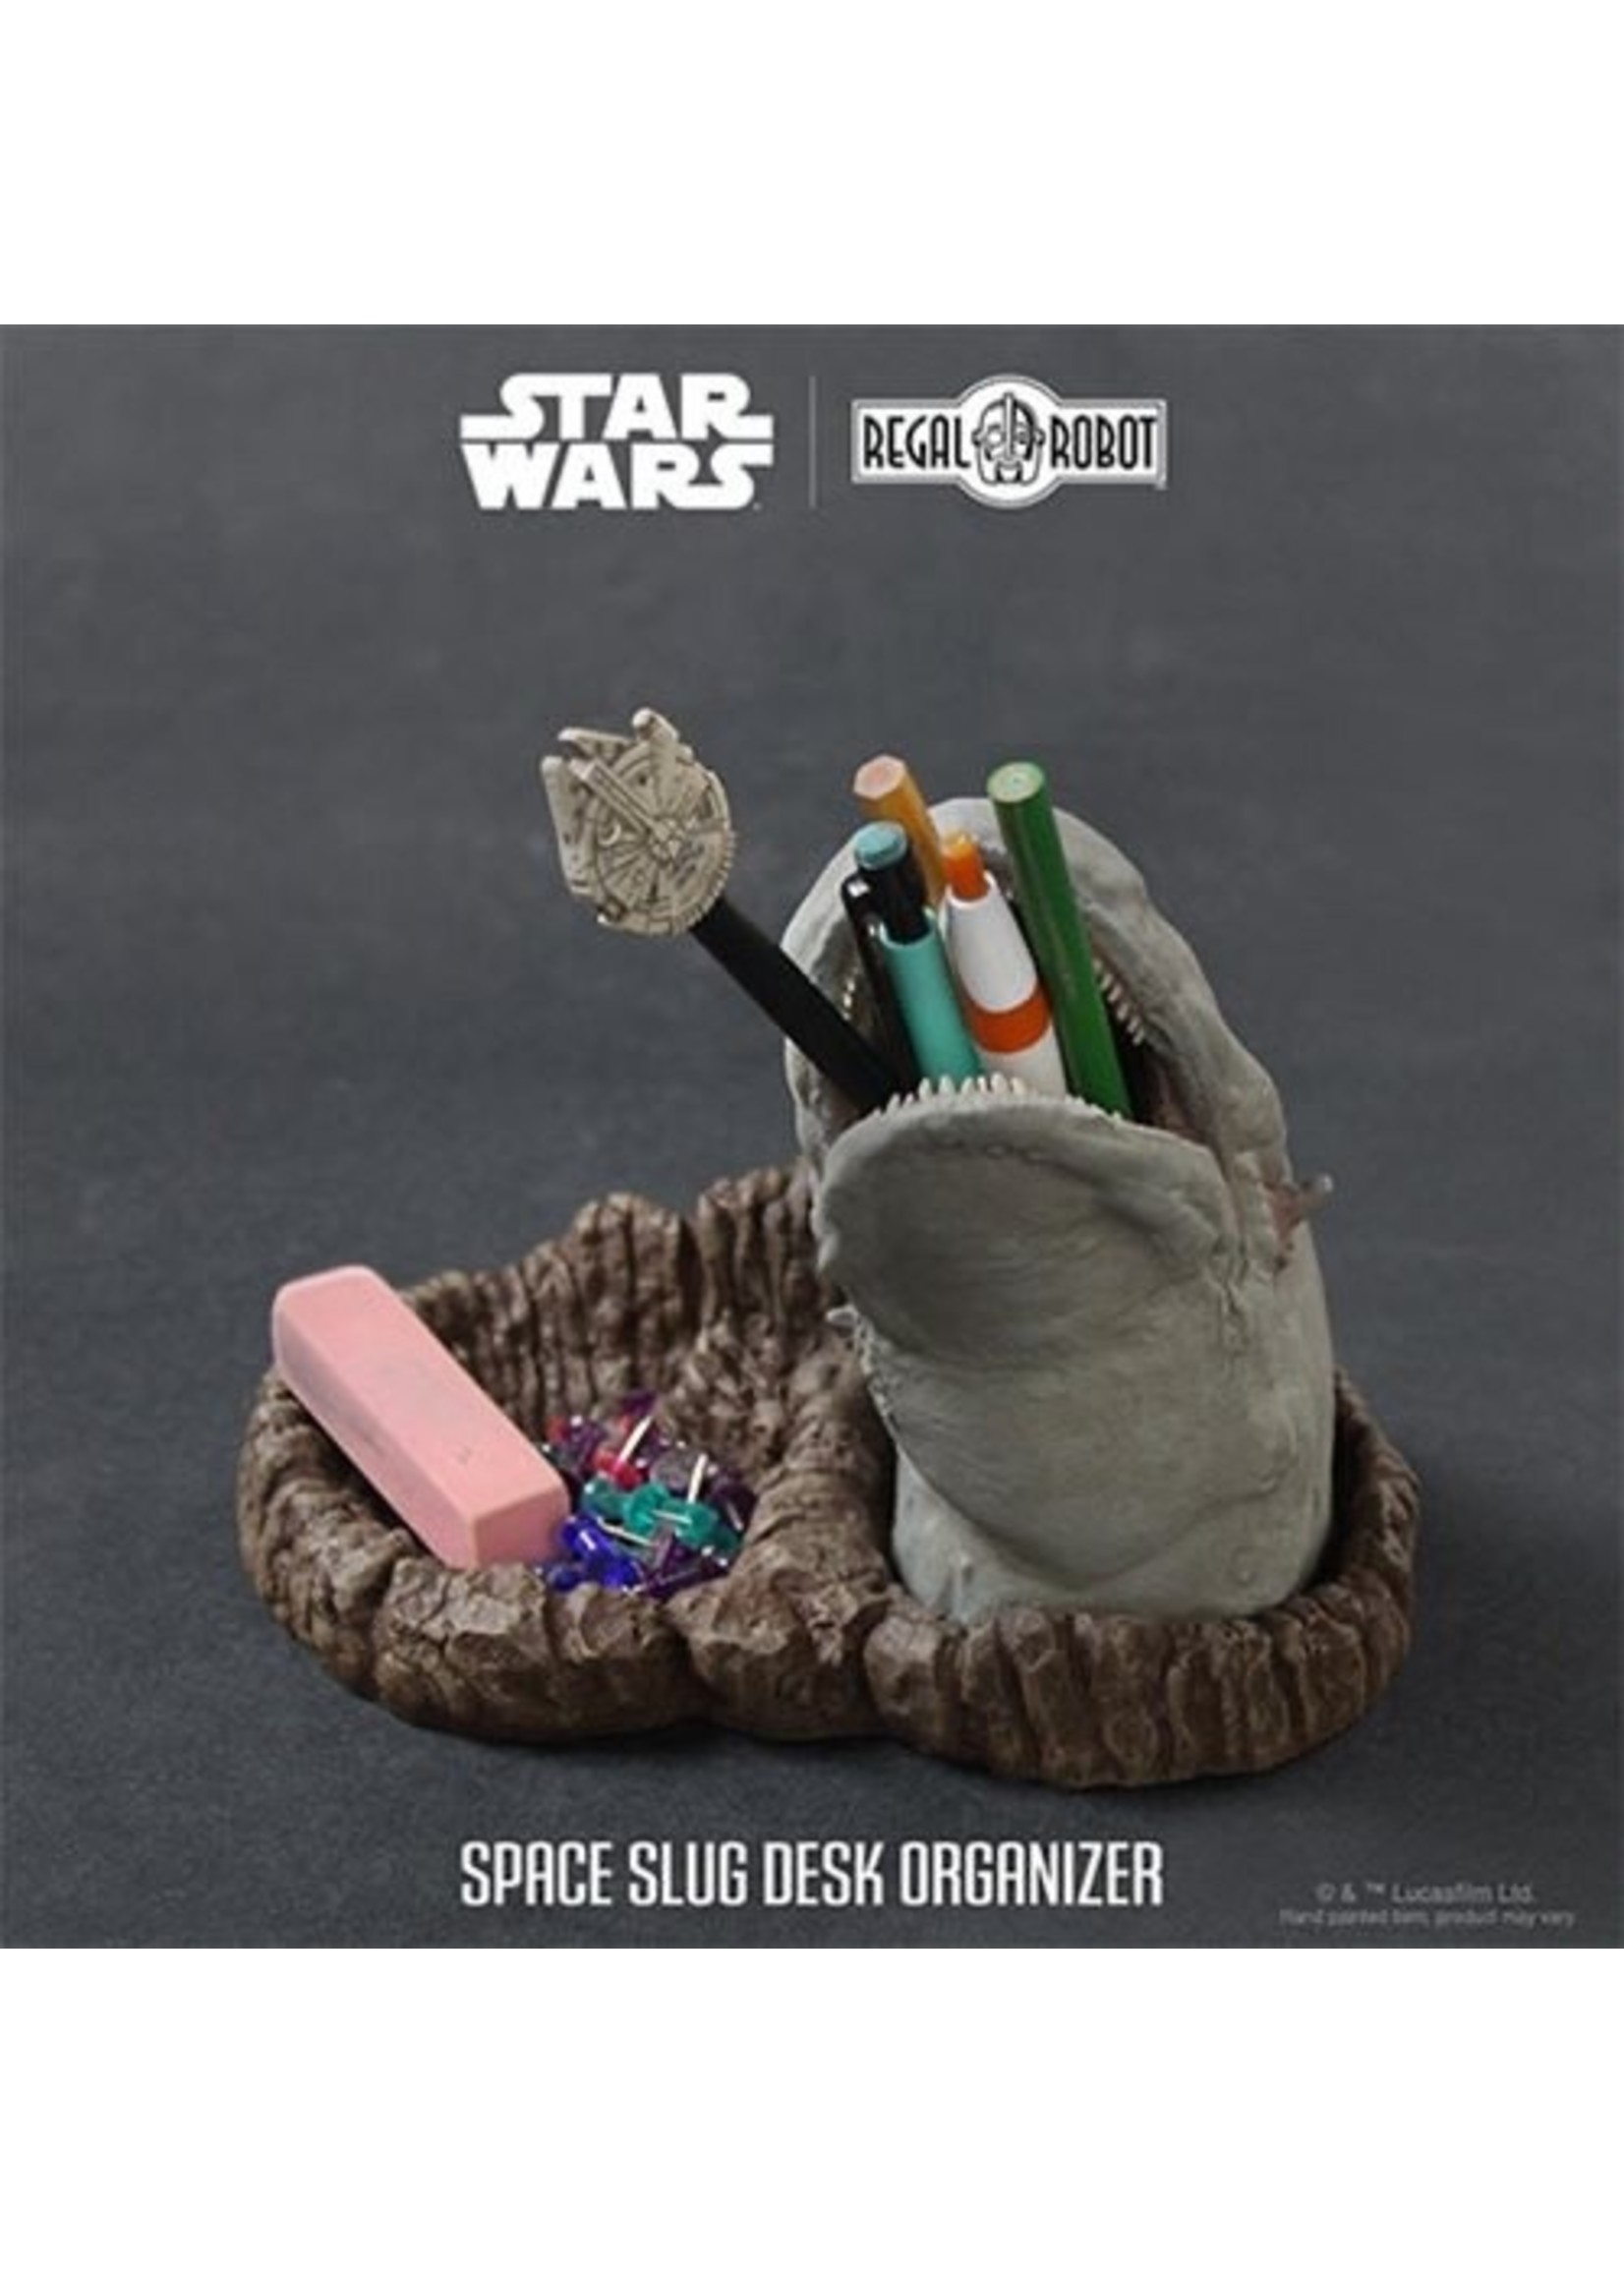 Star Wars: The Empire Strikes Back Space Slug Desk Organizer